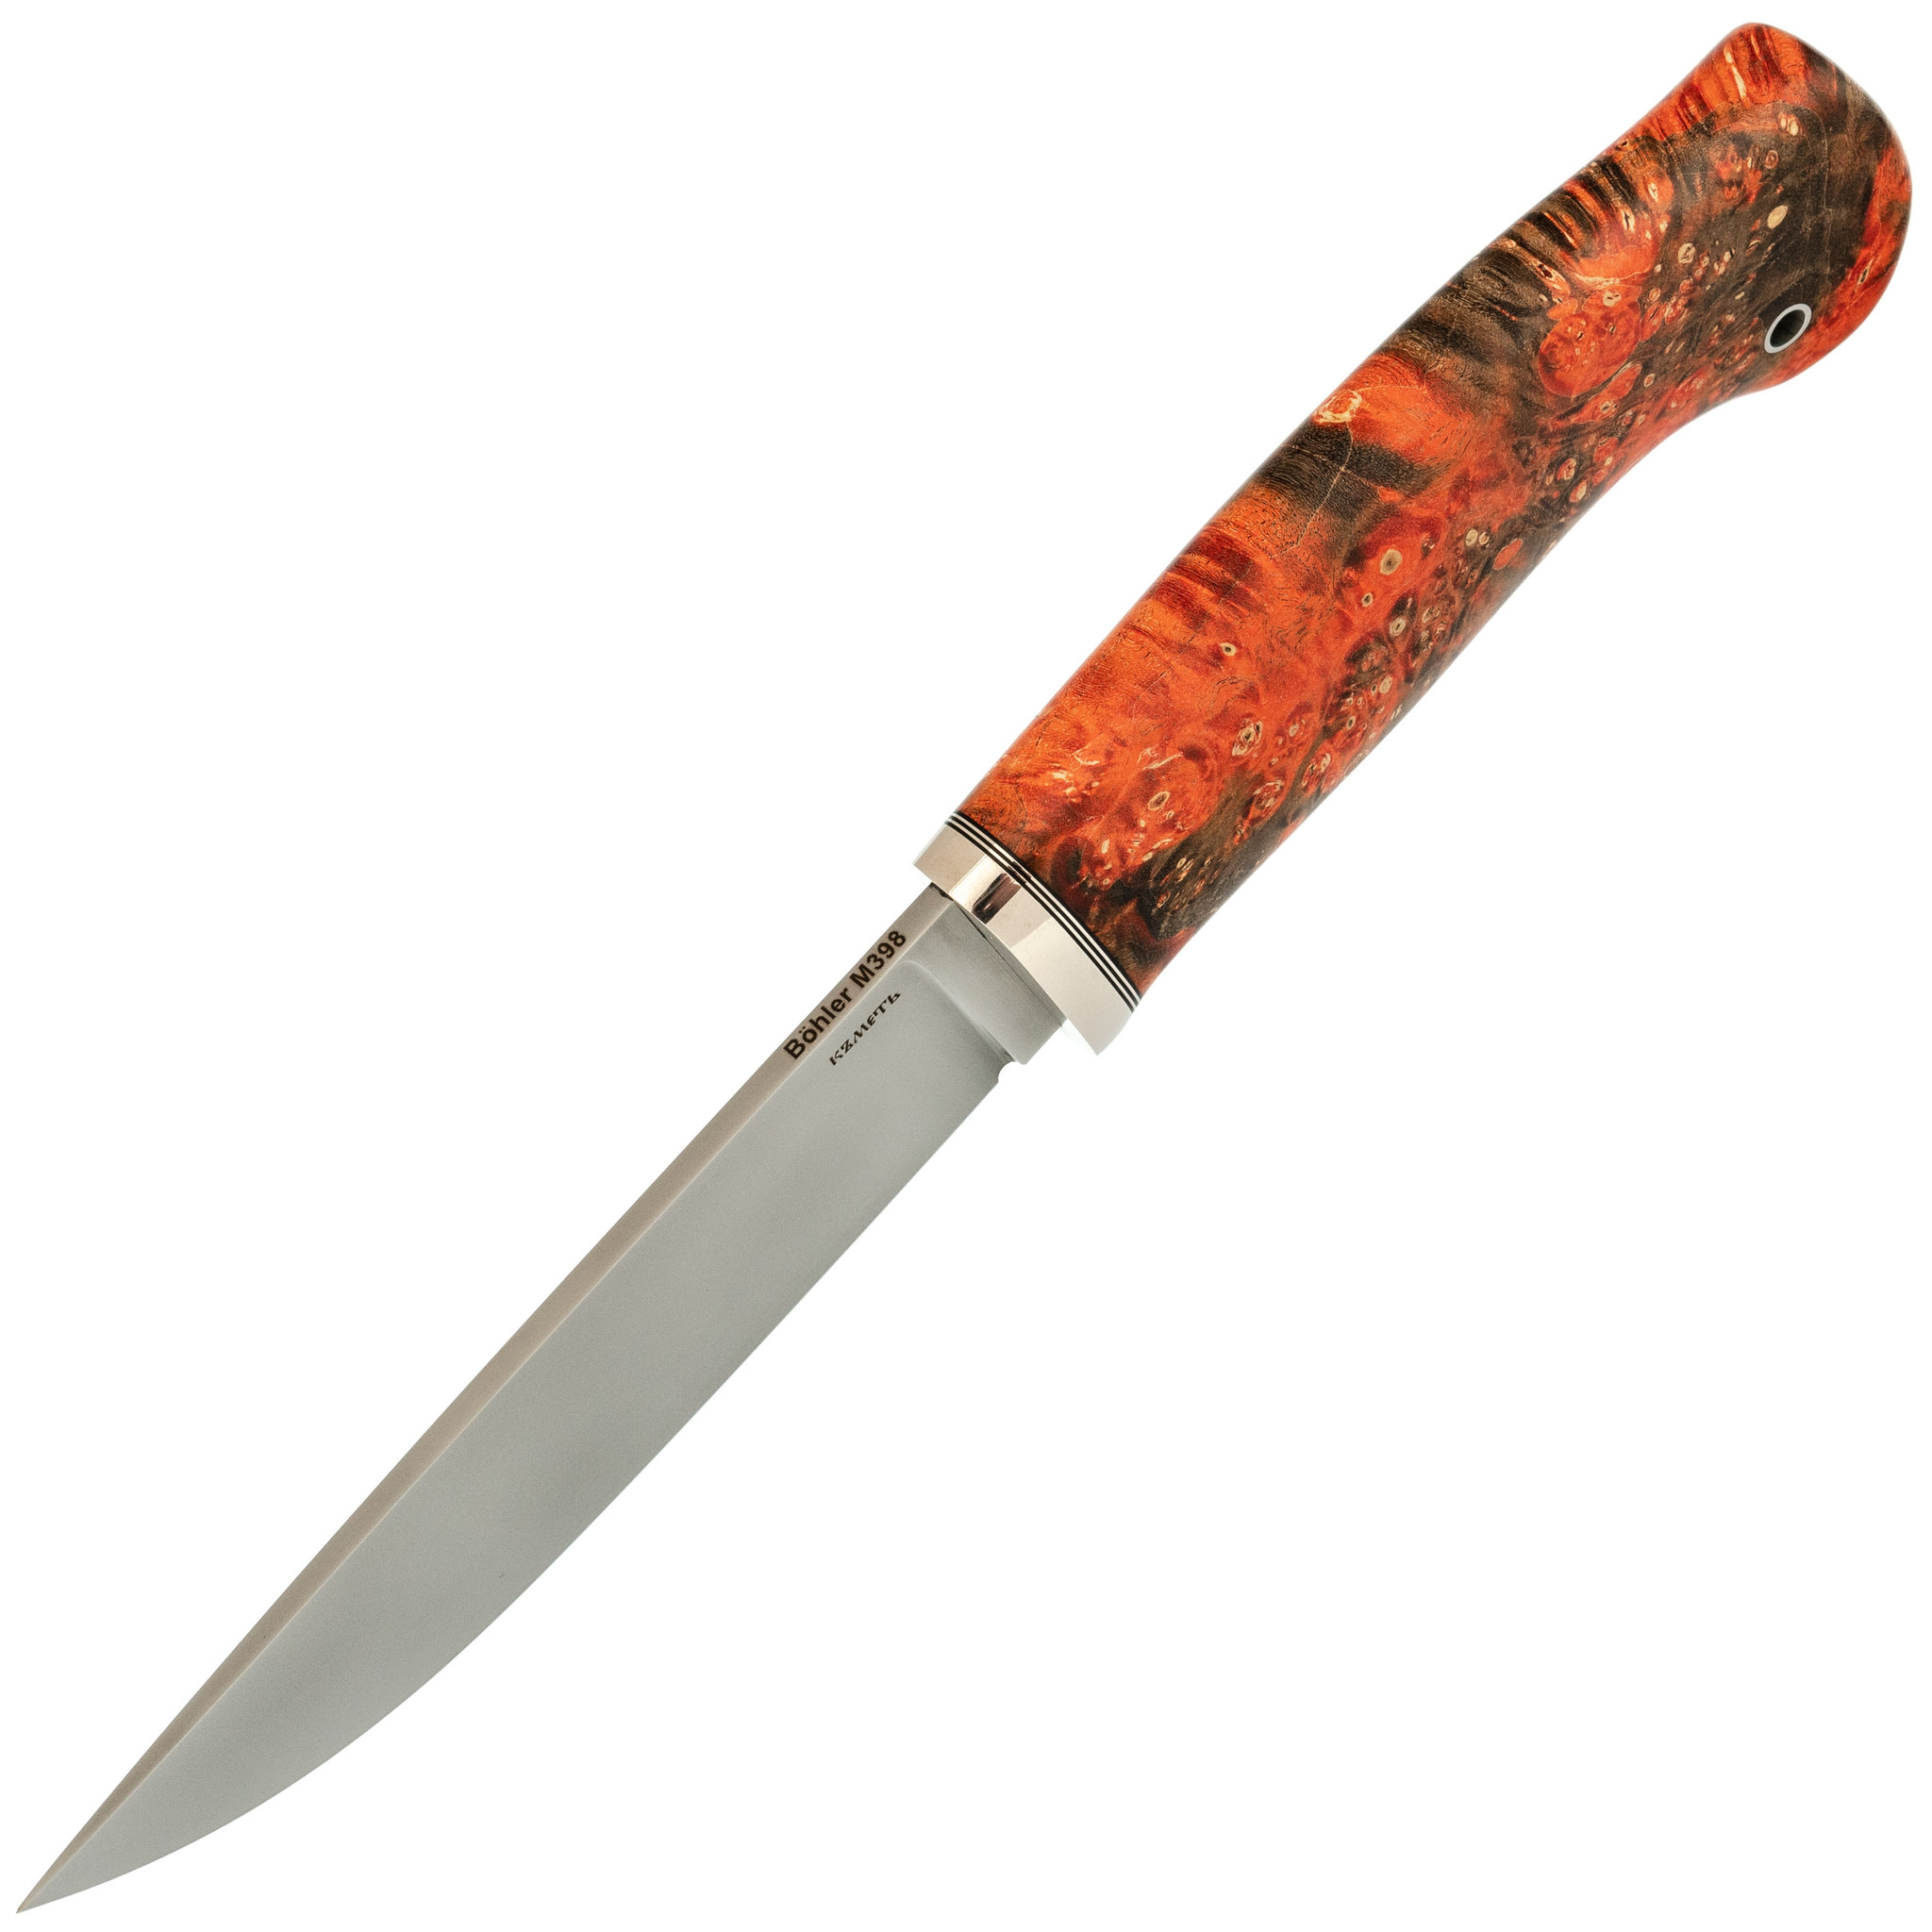 Нож Панцуй, Bohler S110V, карельская береза - фото 2